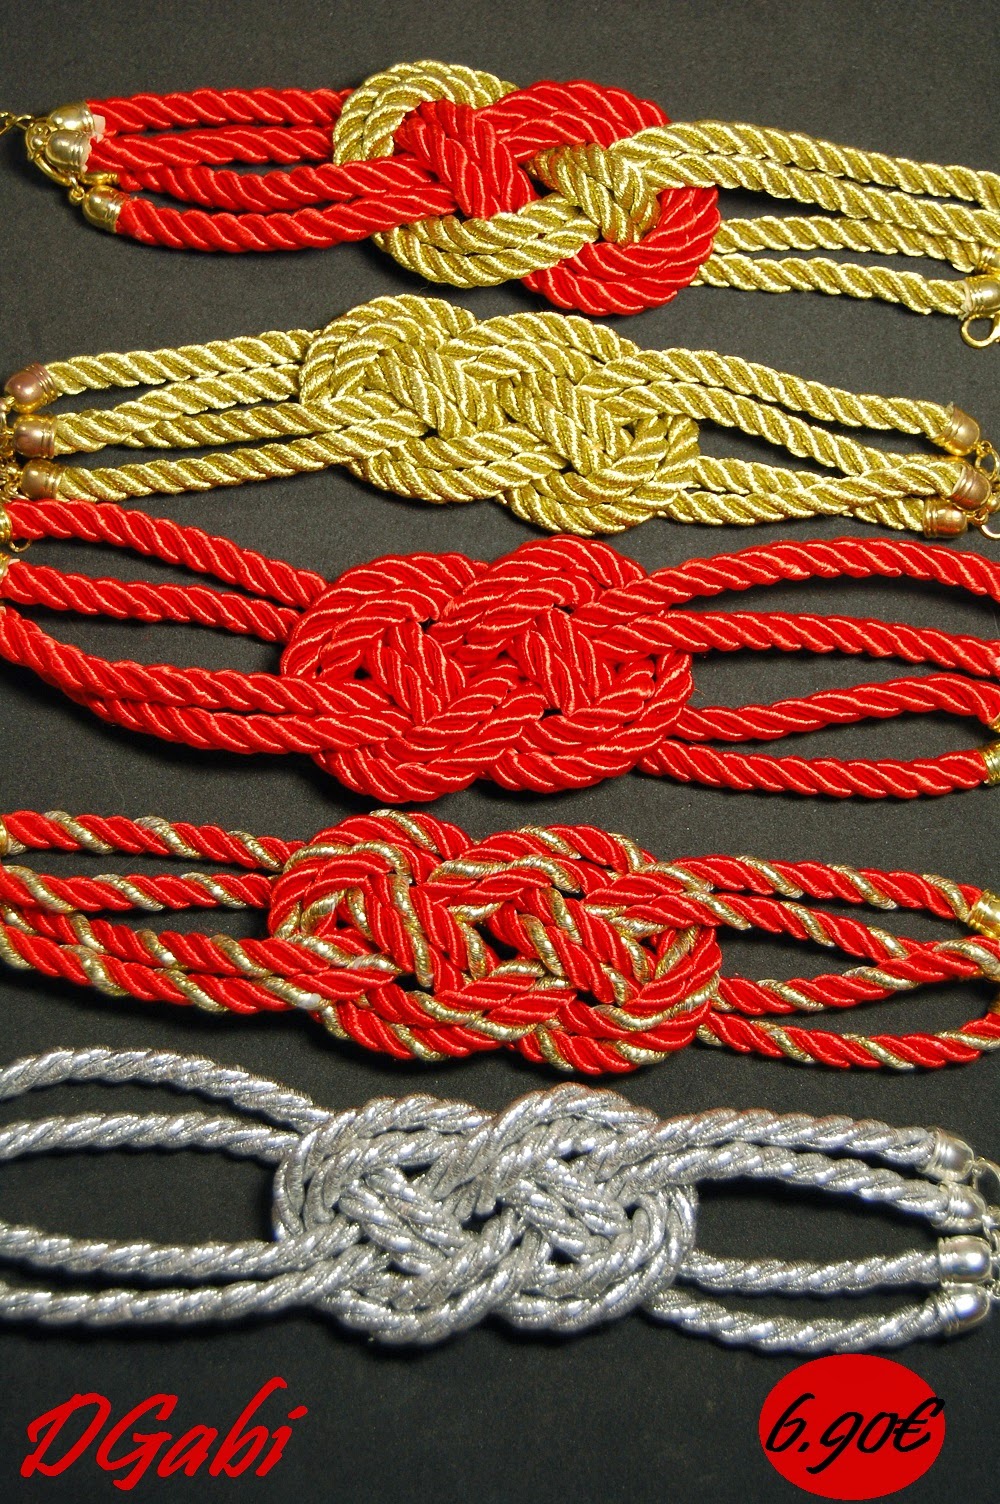 Los Detallitos DGabi: nudos marineros/ knot bracelets